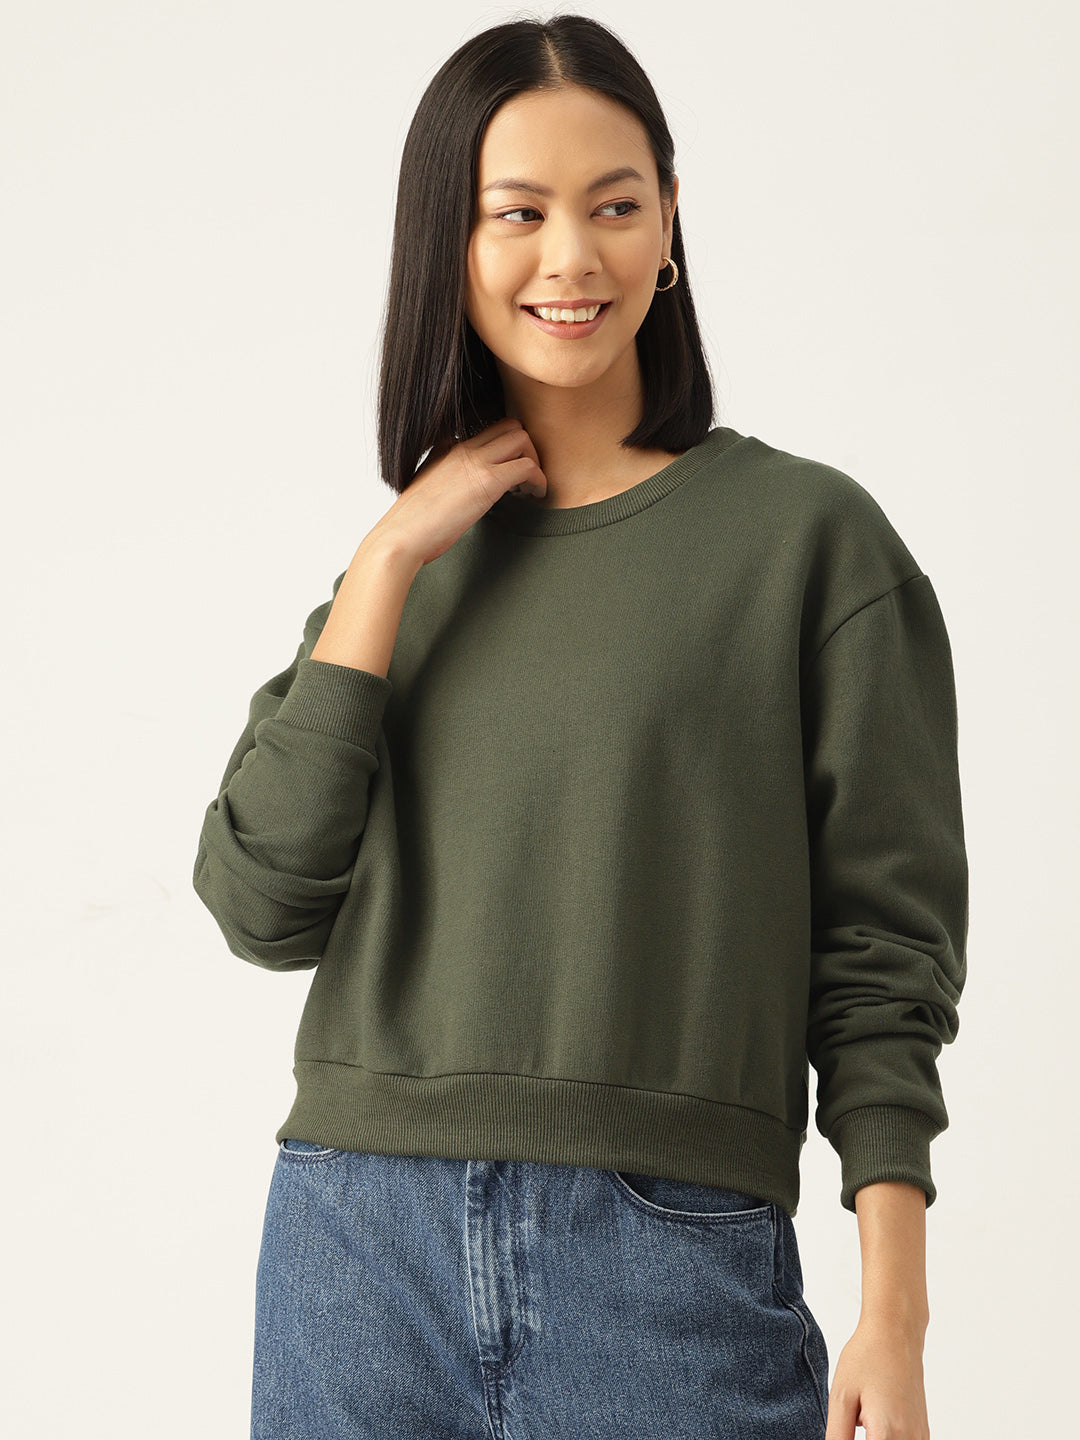 Solid Olive Green Sweatshirt